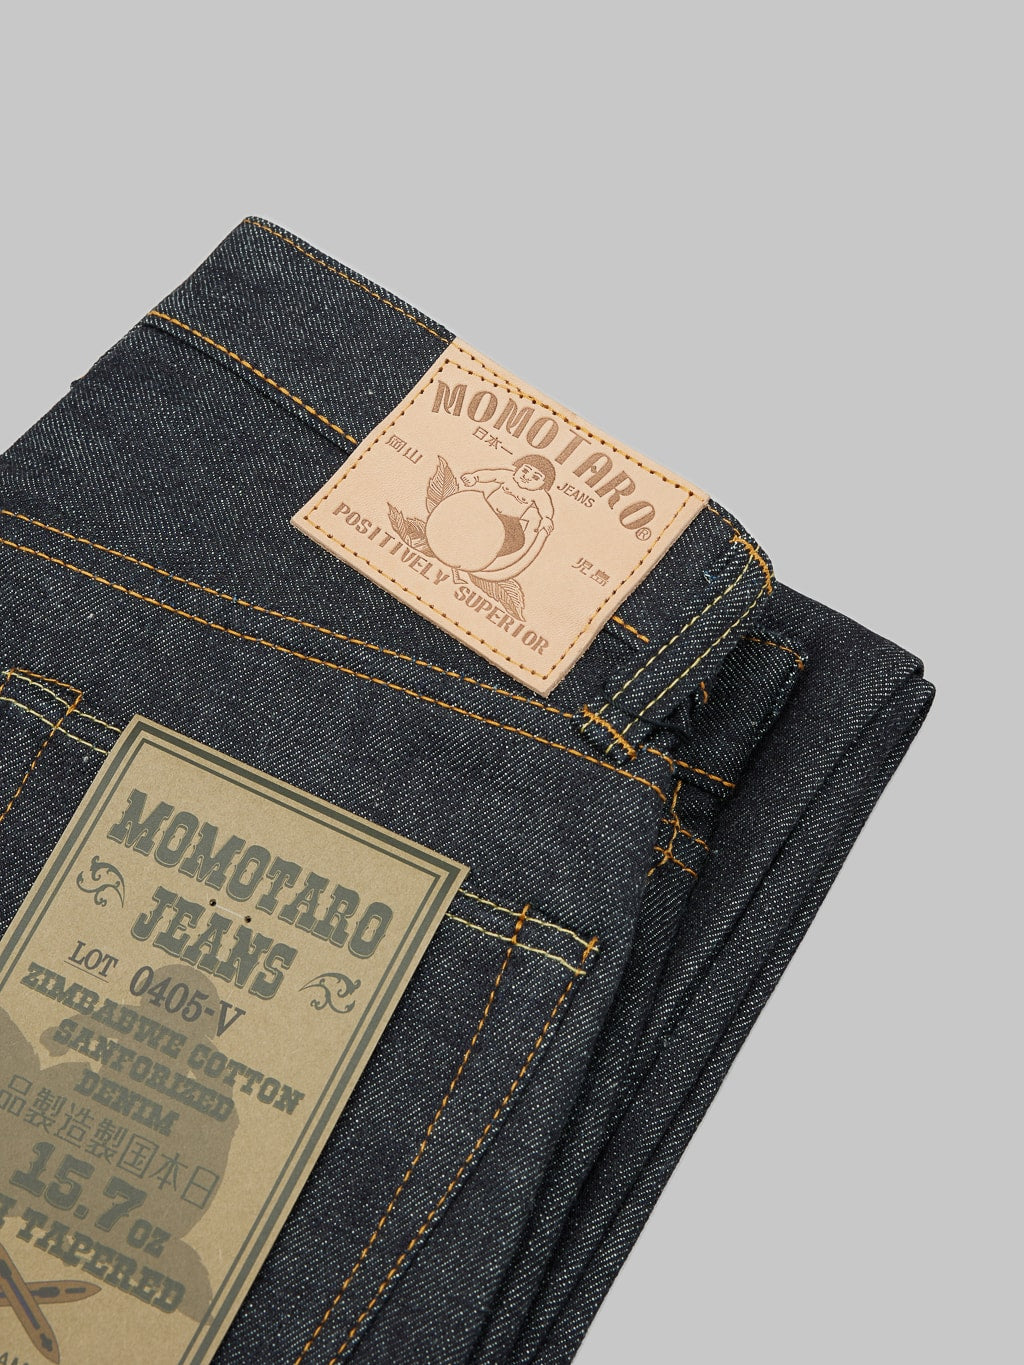 momotaro jeans 0405 v selvedge denim high tapered leather patch